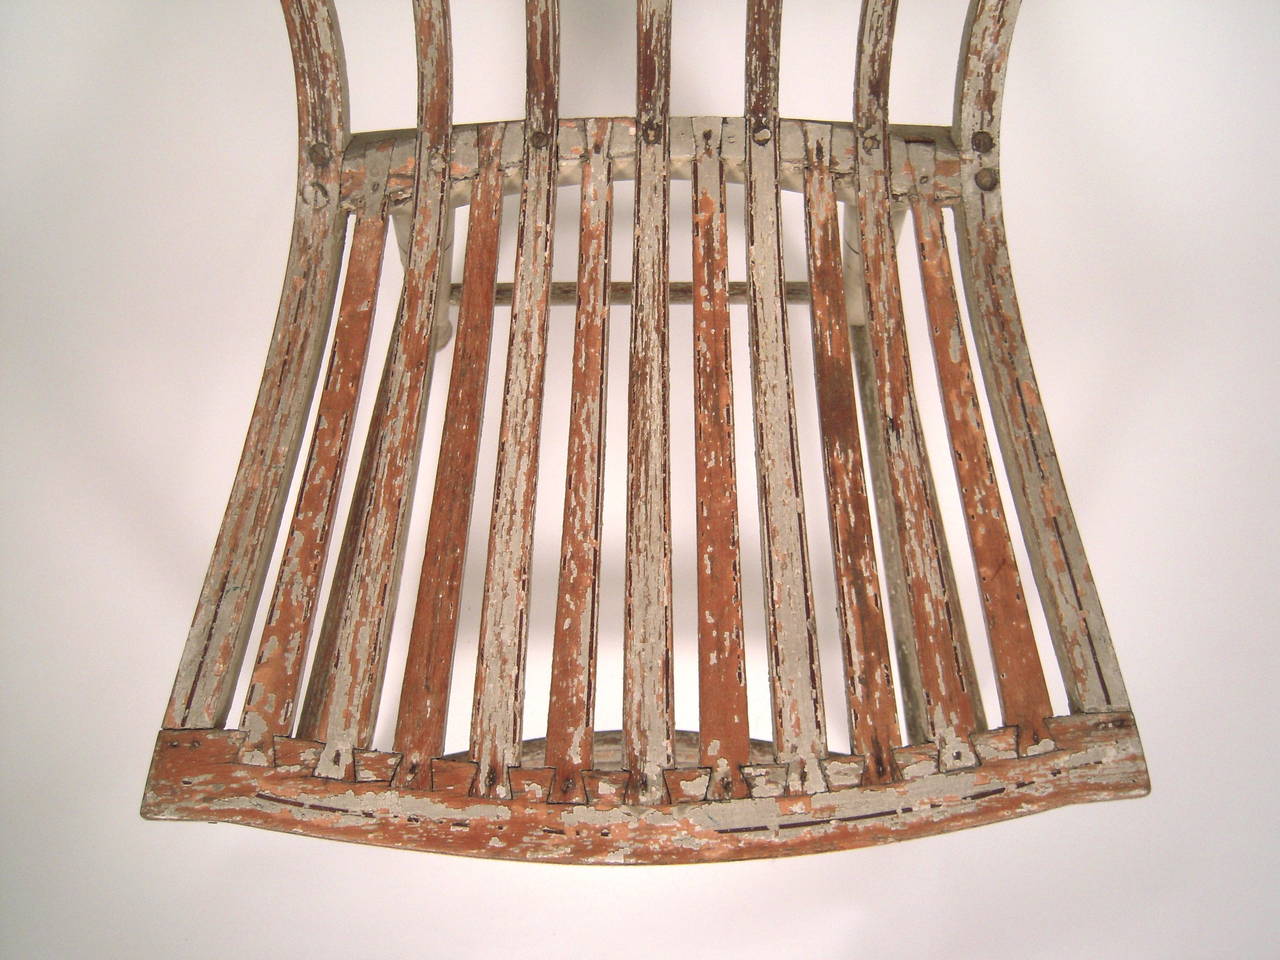 Early 19th Century Rare Pair of Samuel Gragg 'Elastic' Chairs, Boston, circa 1808